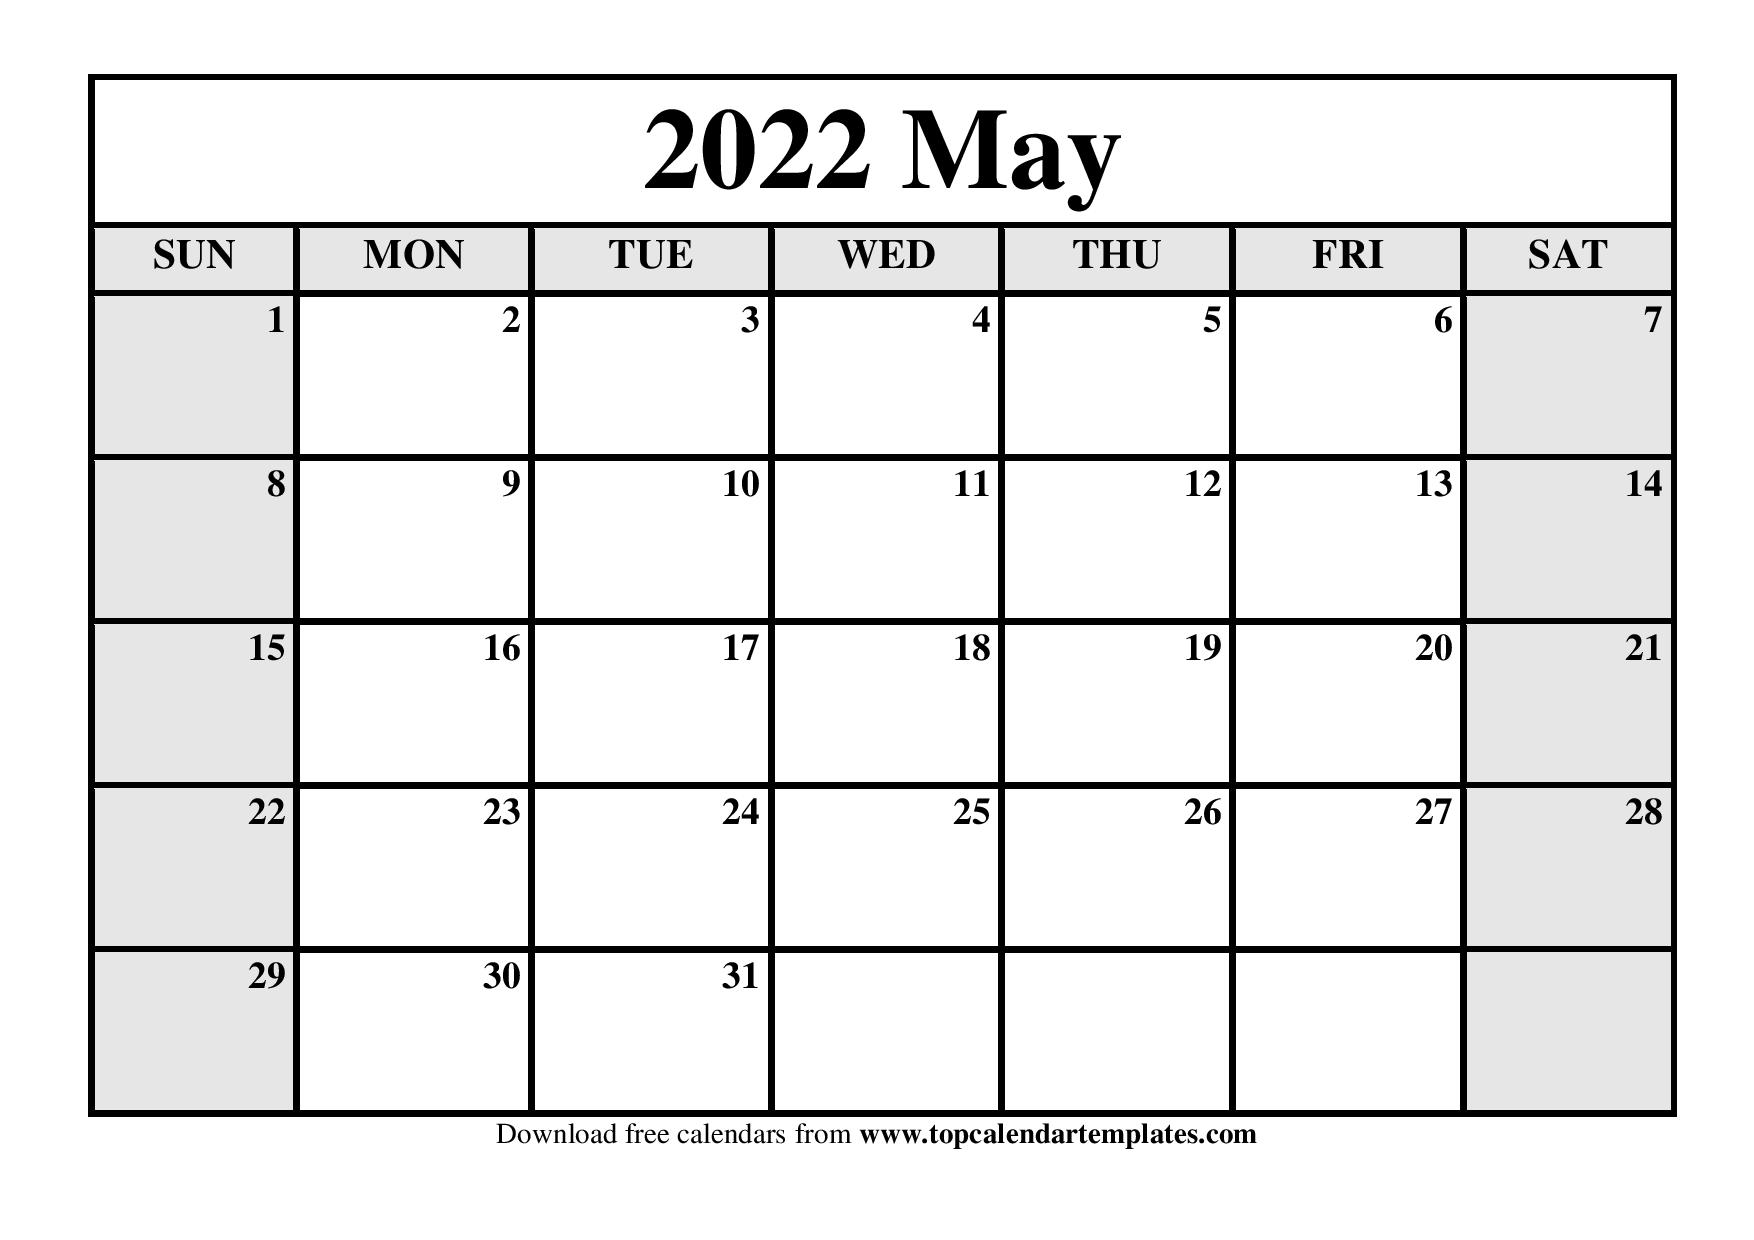 May 2022 Calendar Template Printable Calendar May 2022 Templates - Pdf, Word, Excel